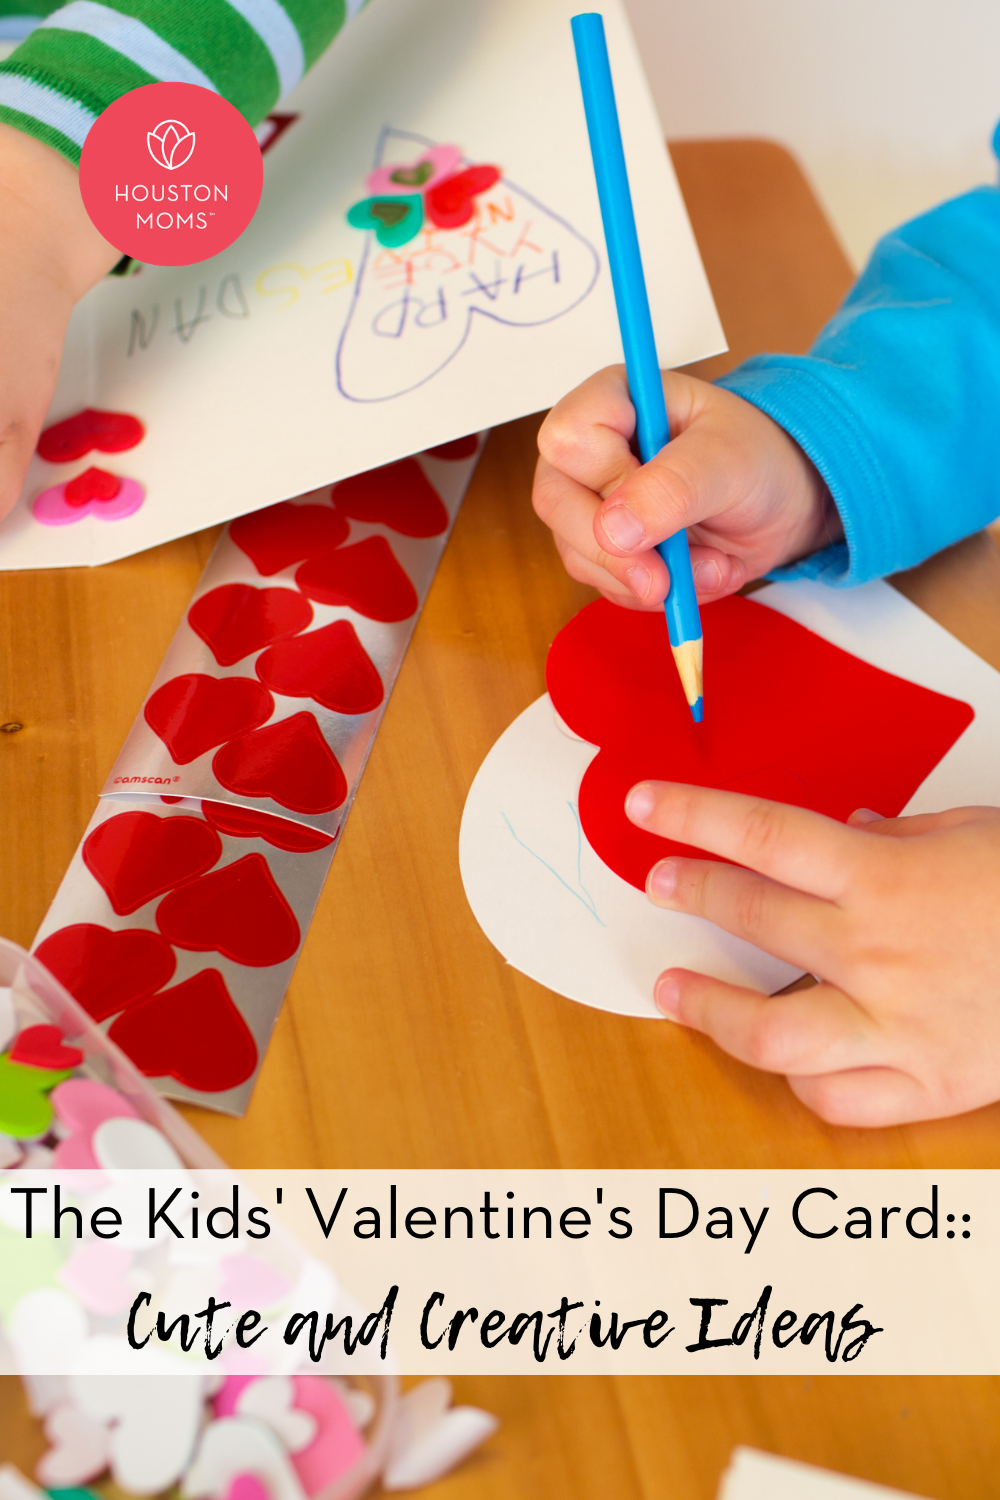 Houston Moms "The Kids' Valentine's Day Card:: Cute and Creative Ideas" #houstonmomsblog #houstonmoms #momsaroundhouston